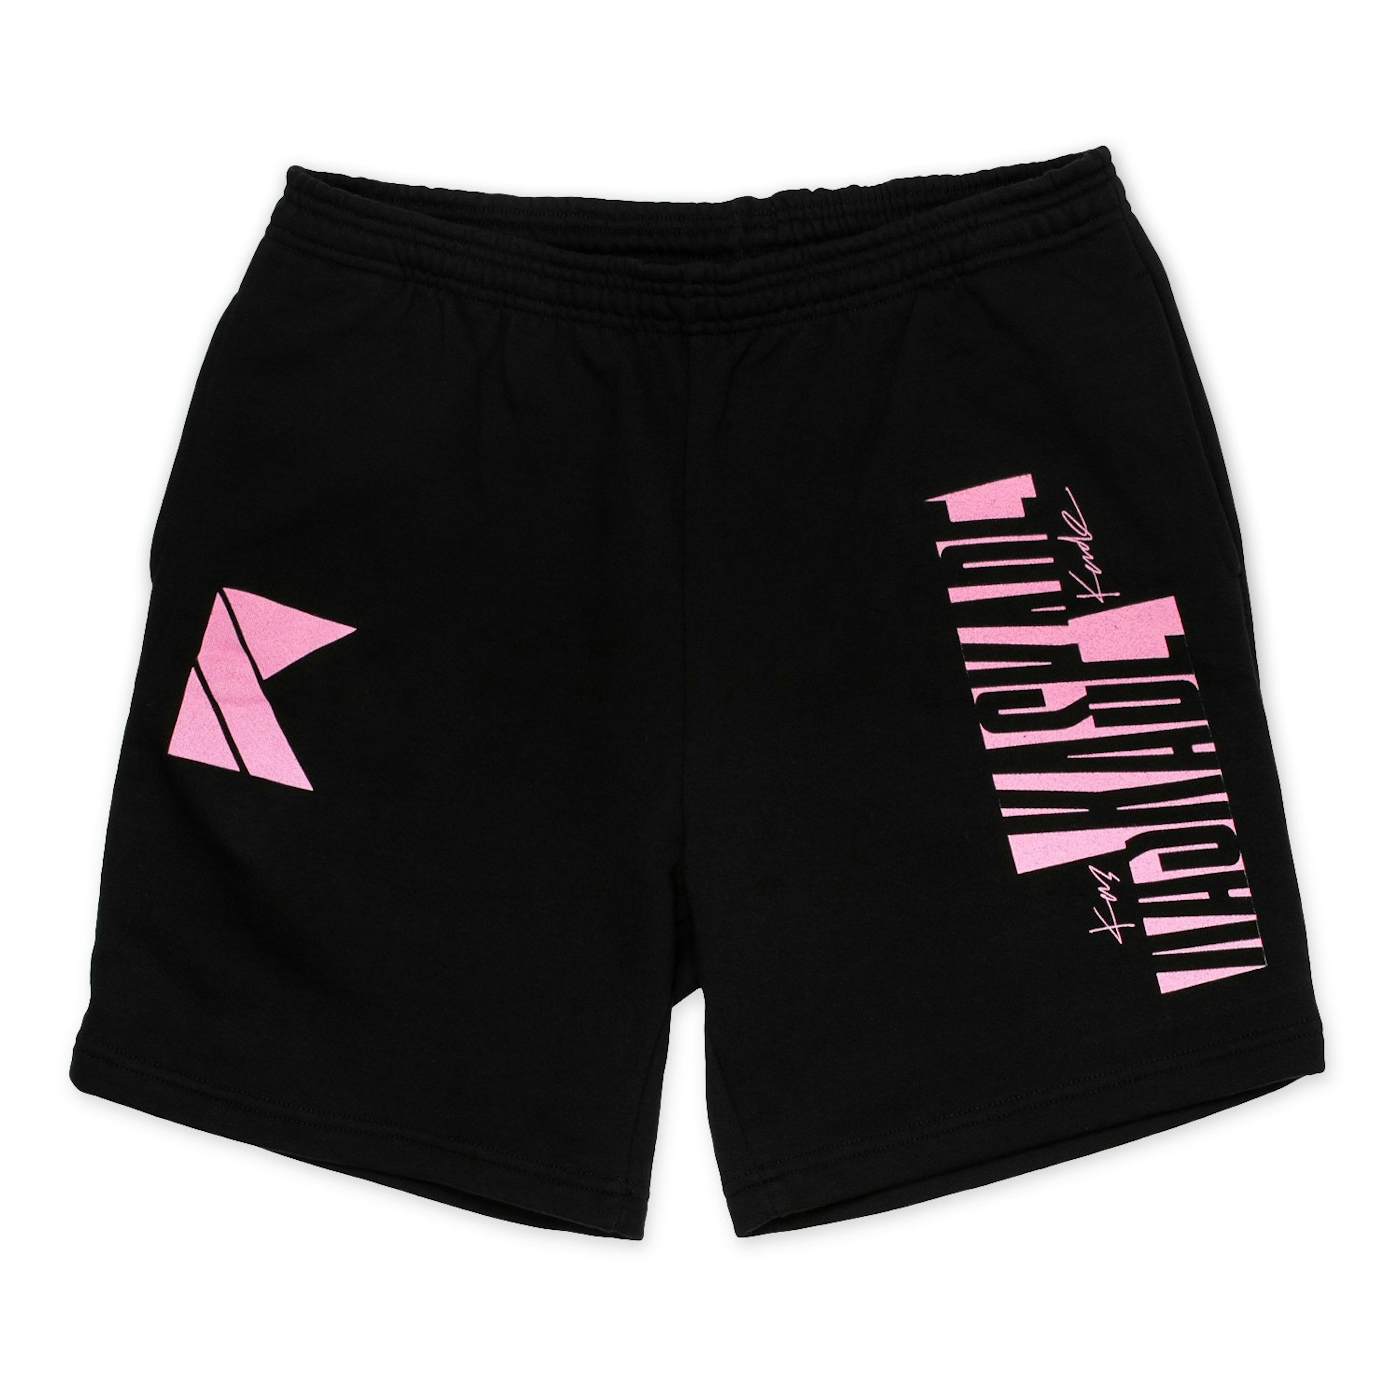 Kaskade Black / Pink Signature Shorts